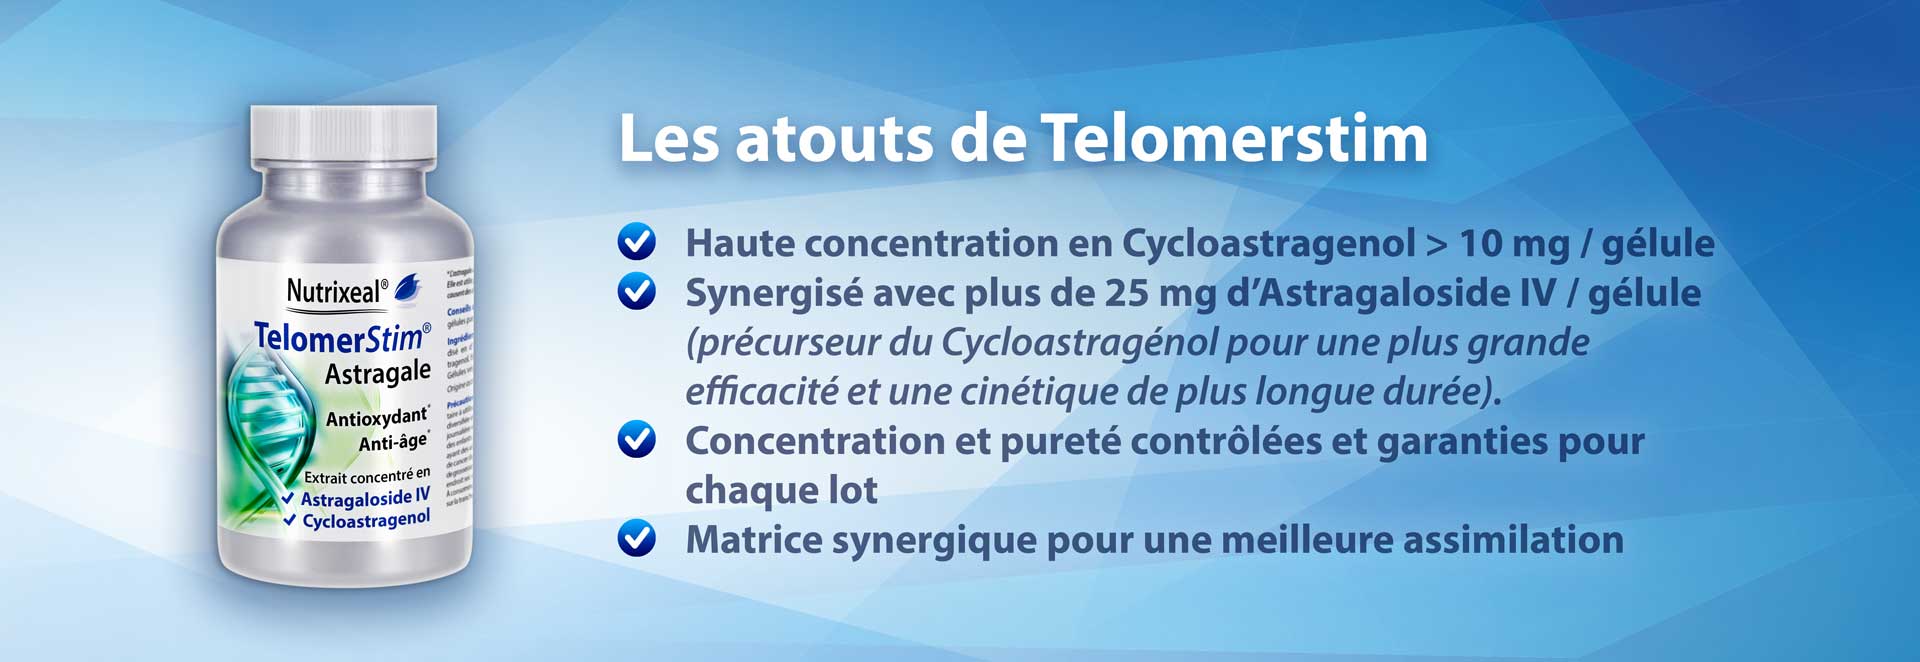 Atouts du Telomerstim (Astragale, Cycloastragenol, Astragalosides...)